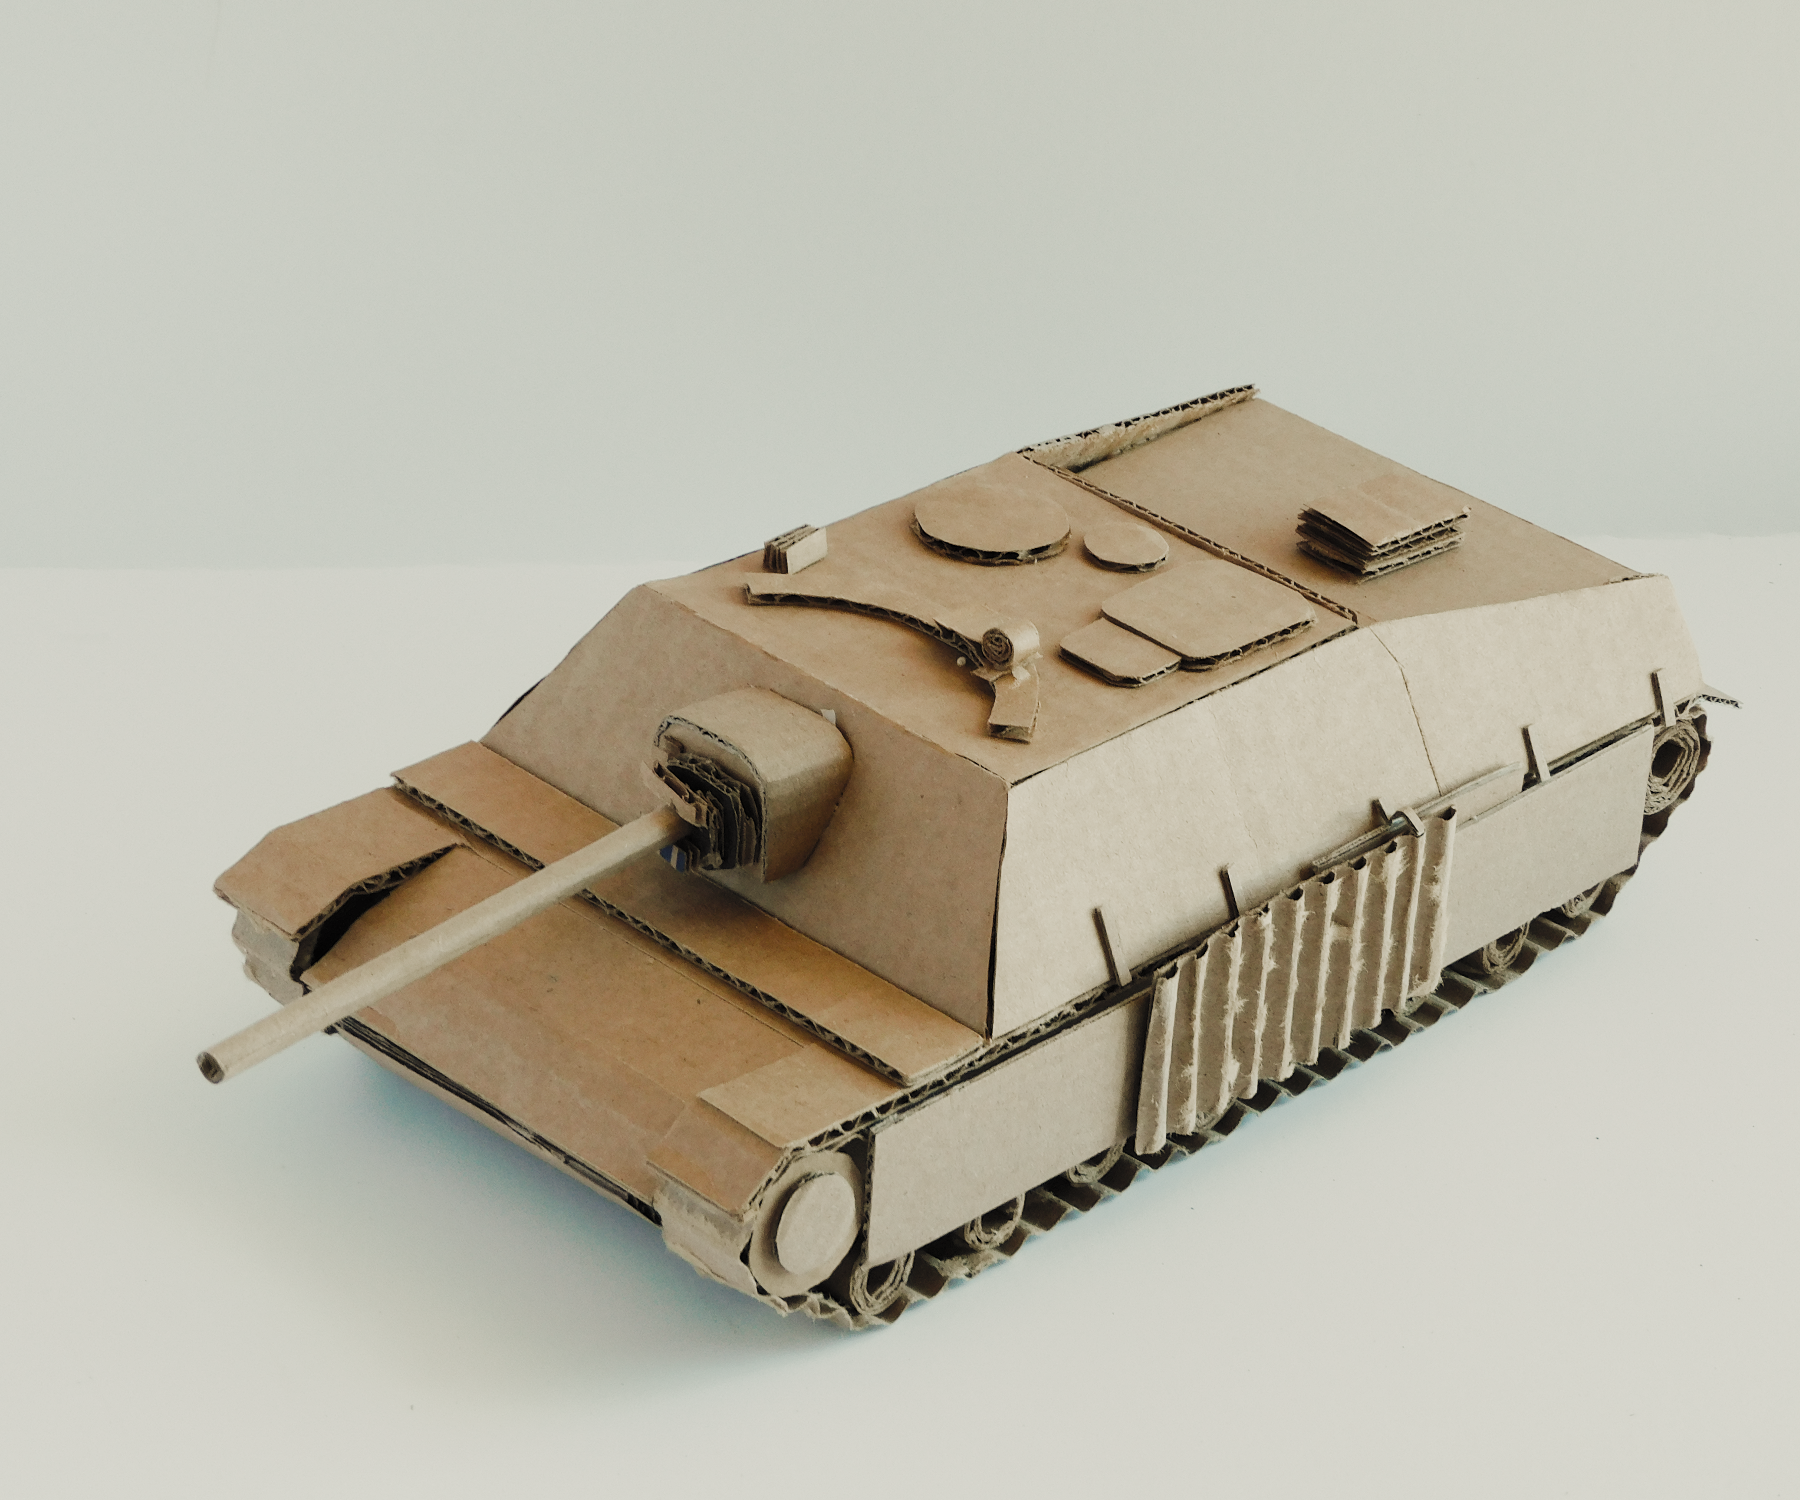 How to Make a Cardboard Jagdpanzer WW2 German Tank